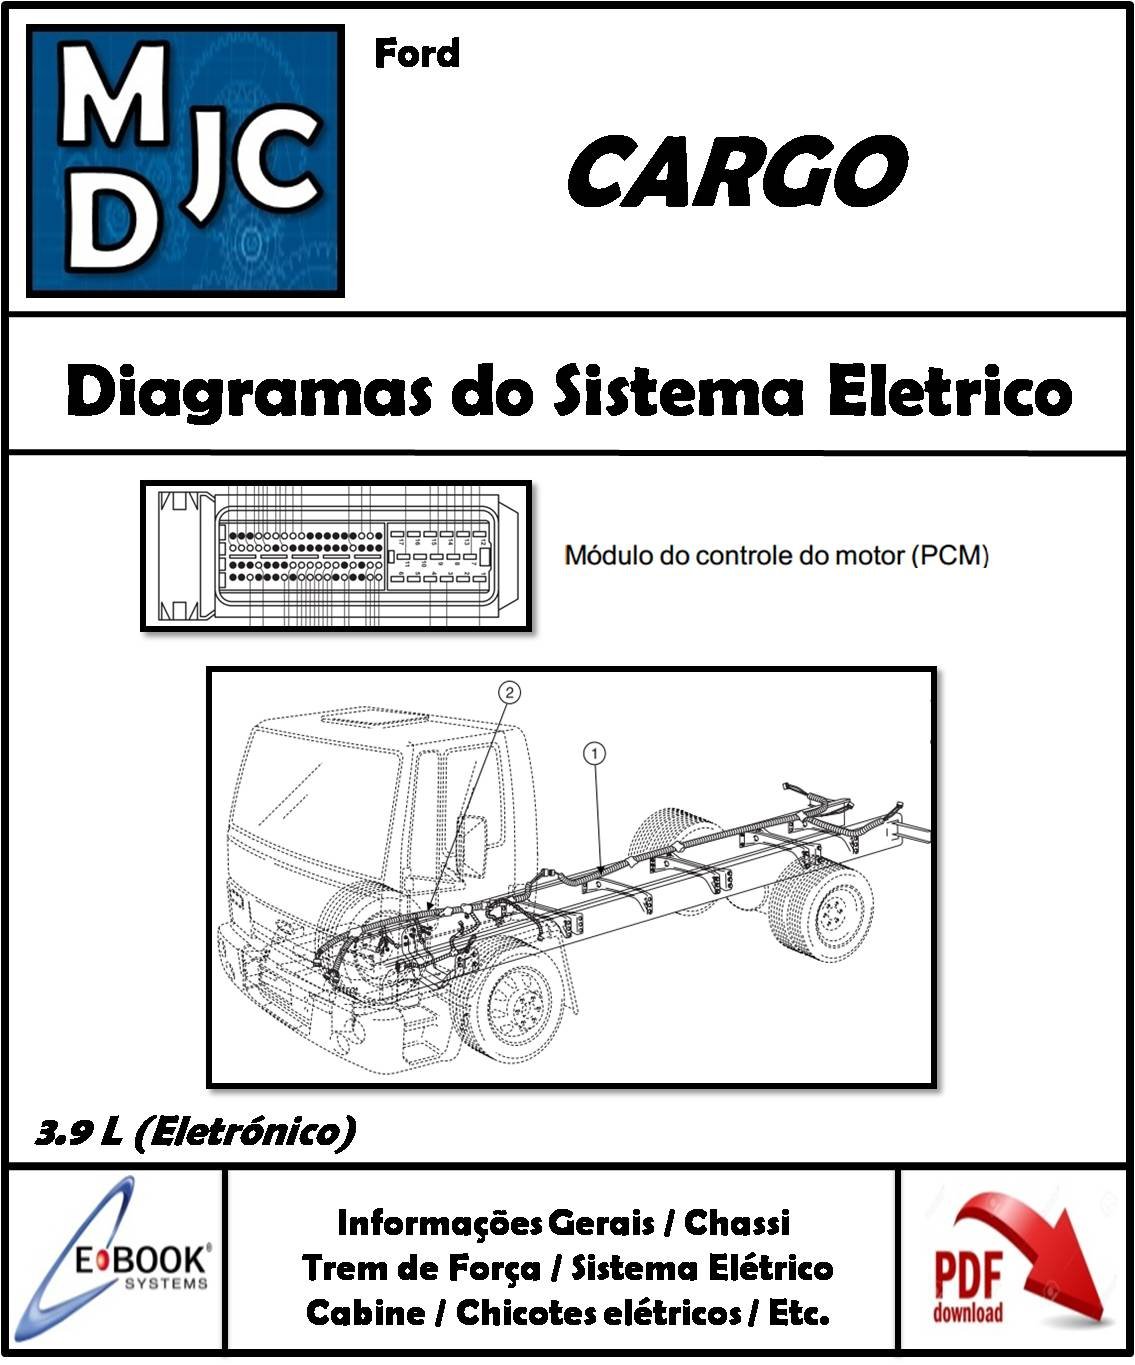 Ford Cargo 3.9 L Electrónico